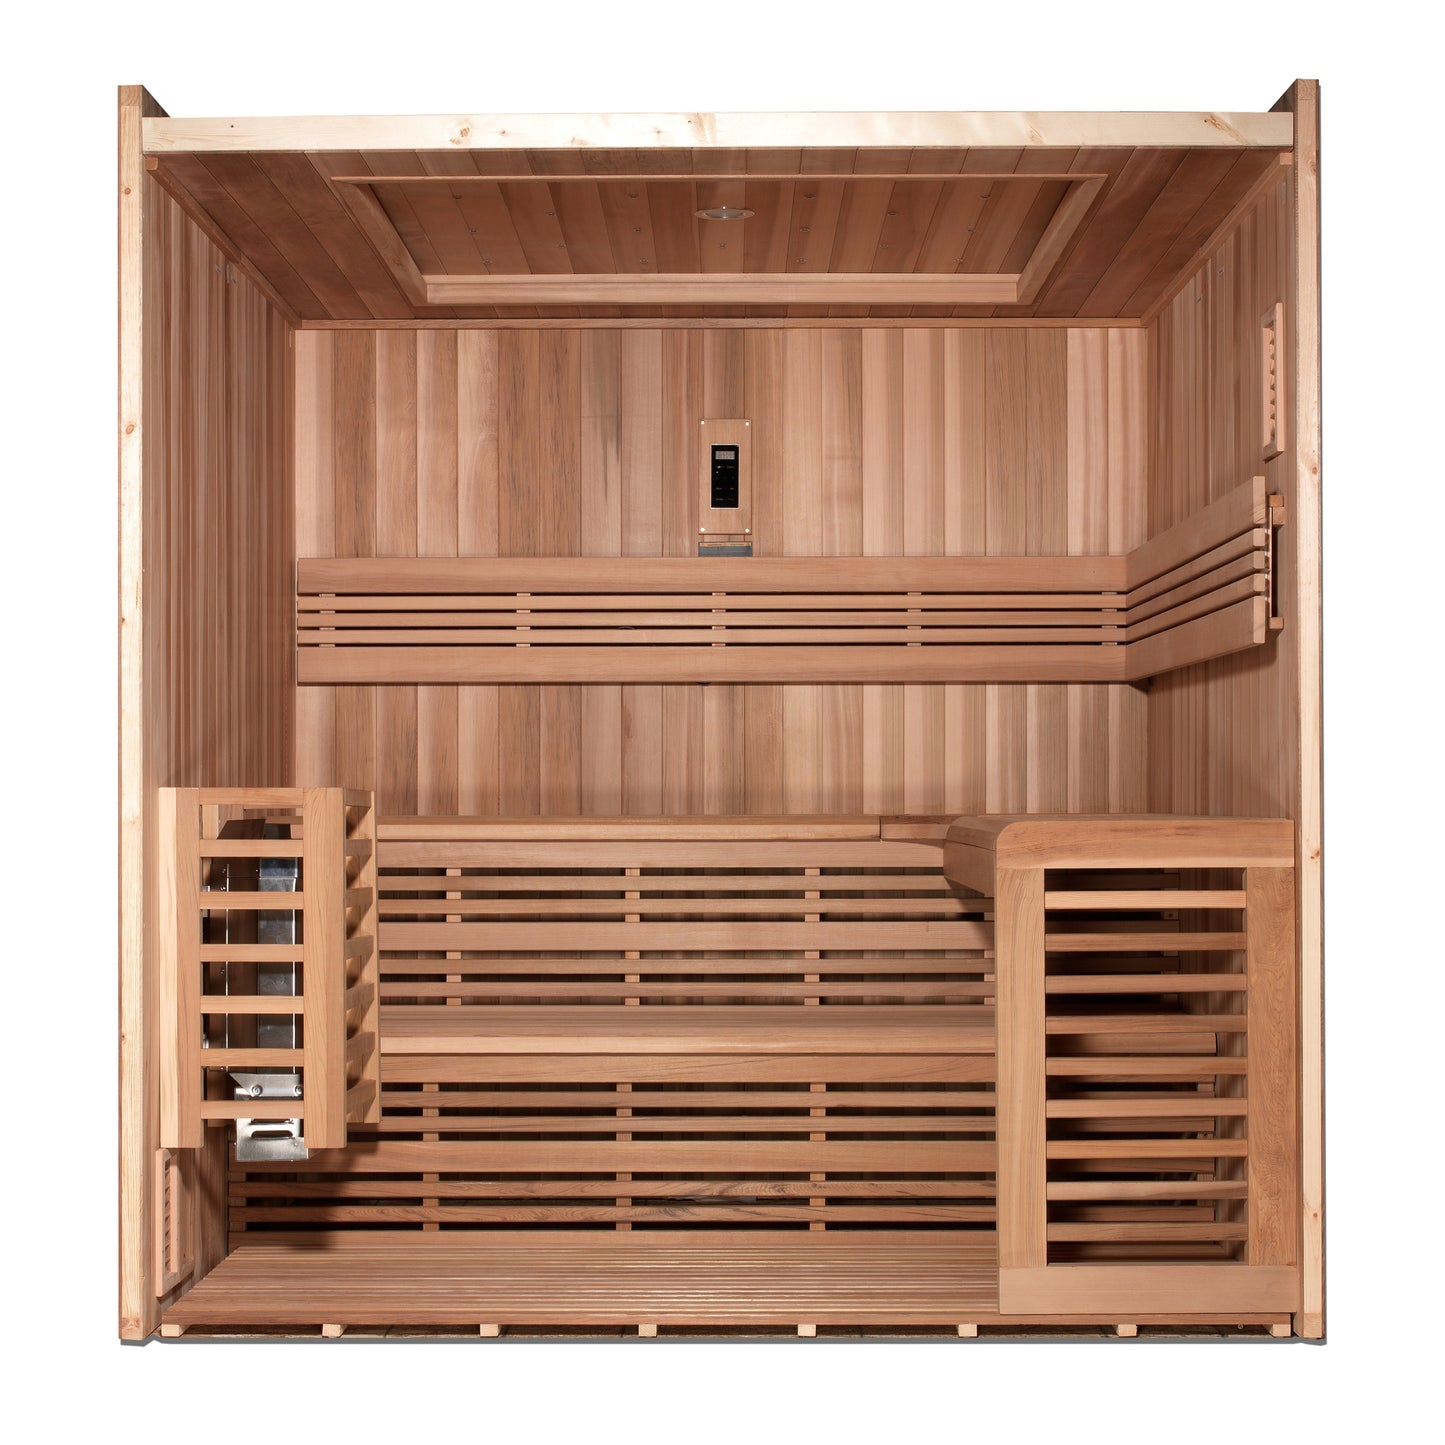 Golden Designs "Osla Edition" 6 Person Traditional Steam Sauna Canadian Red Cedar